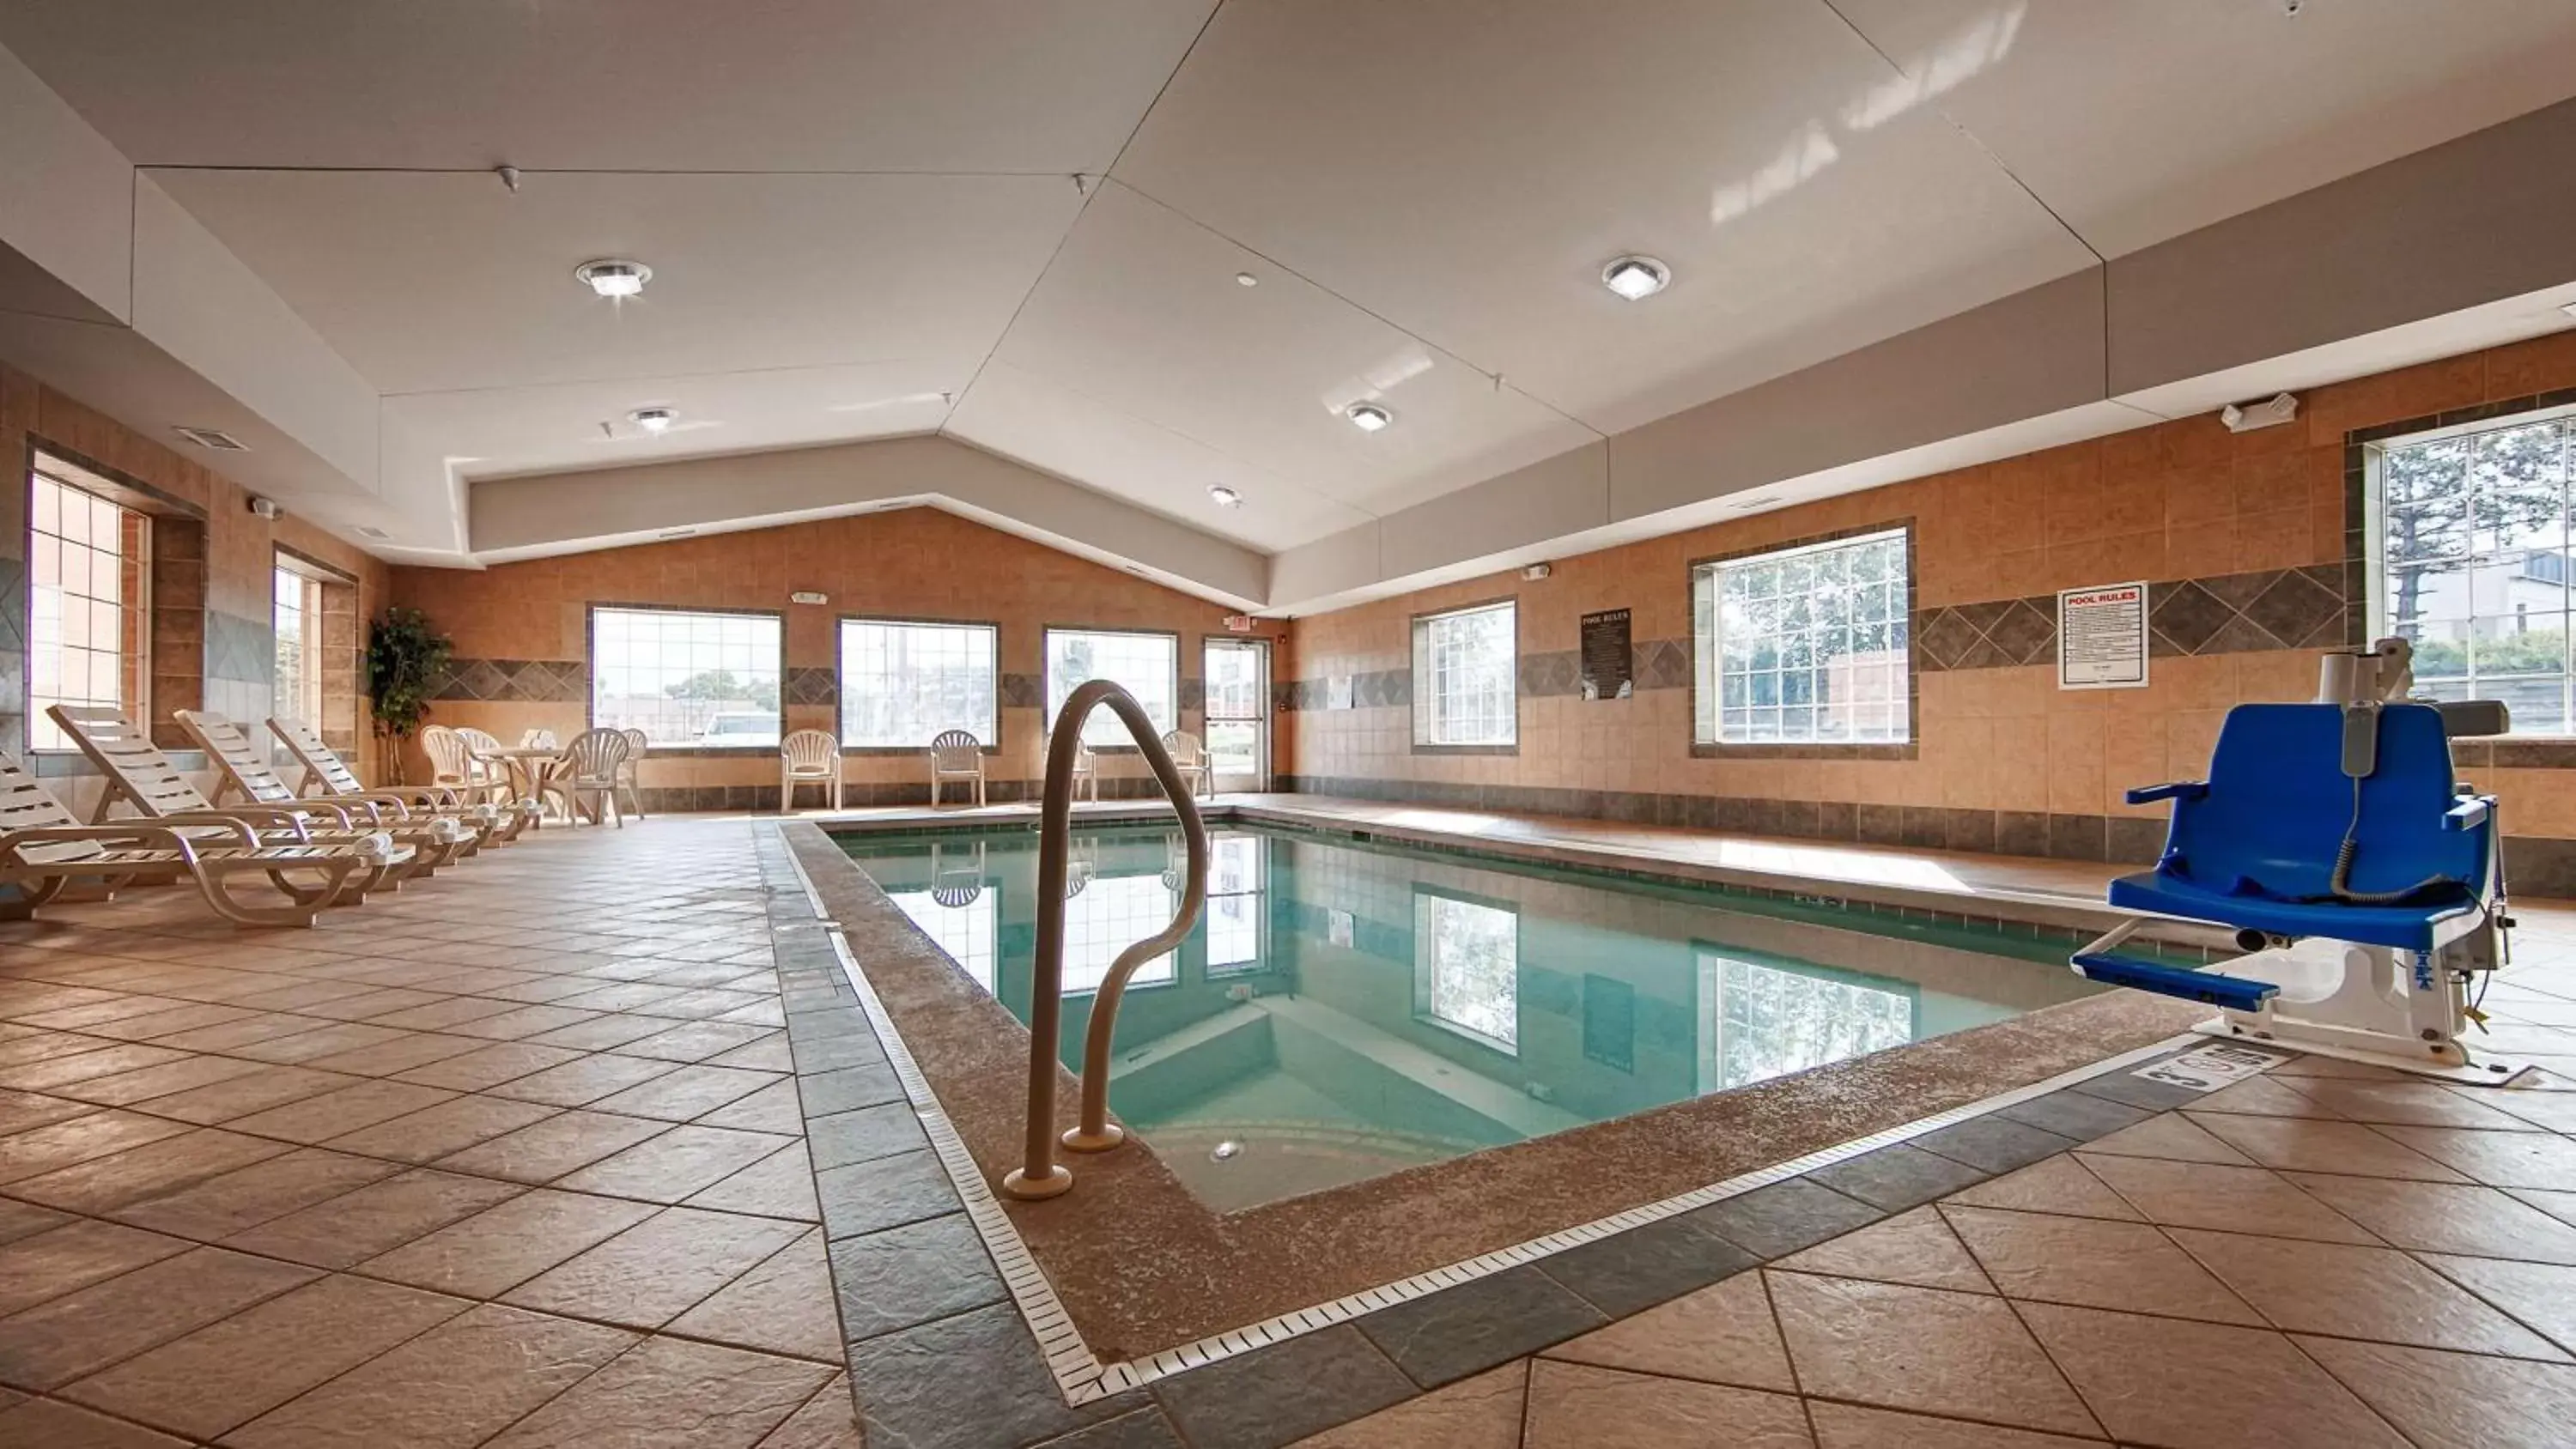 On site, Swimming Pool in Best Western Executive Inn & Suites